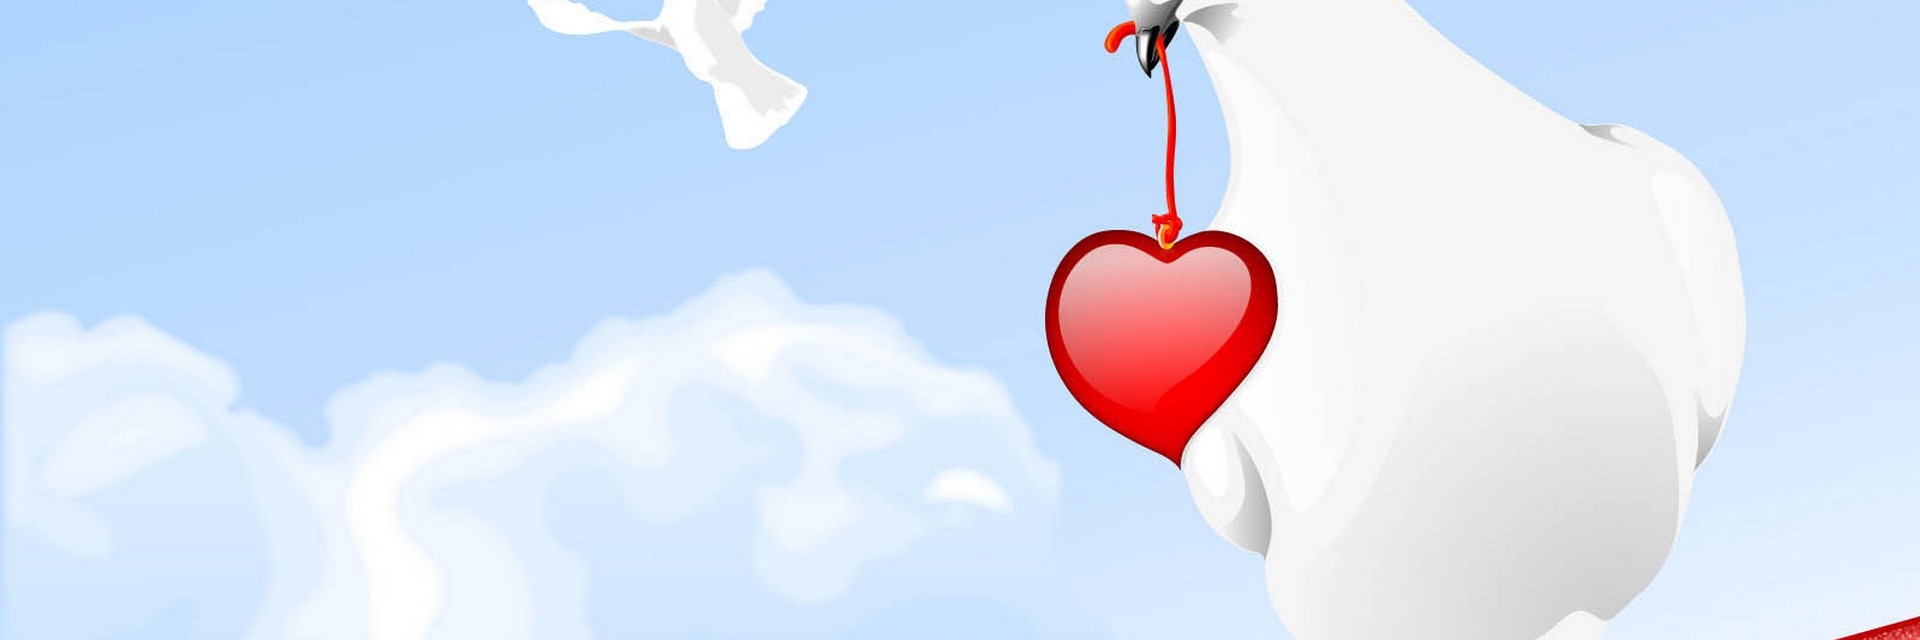 Твое сердце птица. Птички на сердечке. Сердечко из птиц. Птичка из сердечек. Сердце птицы фото.